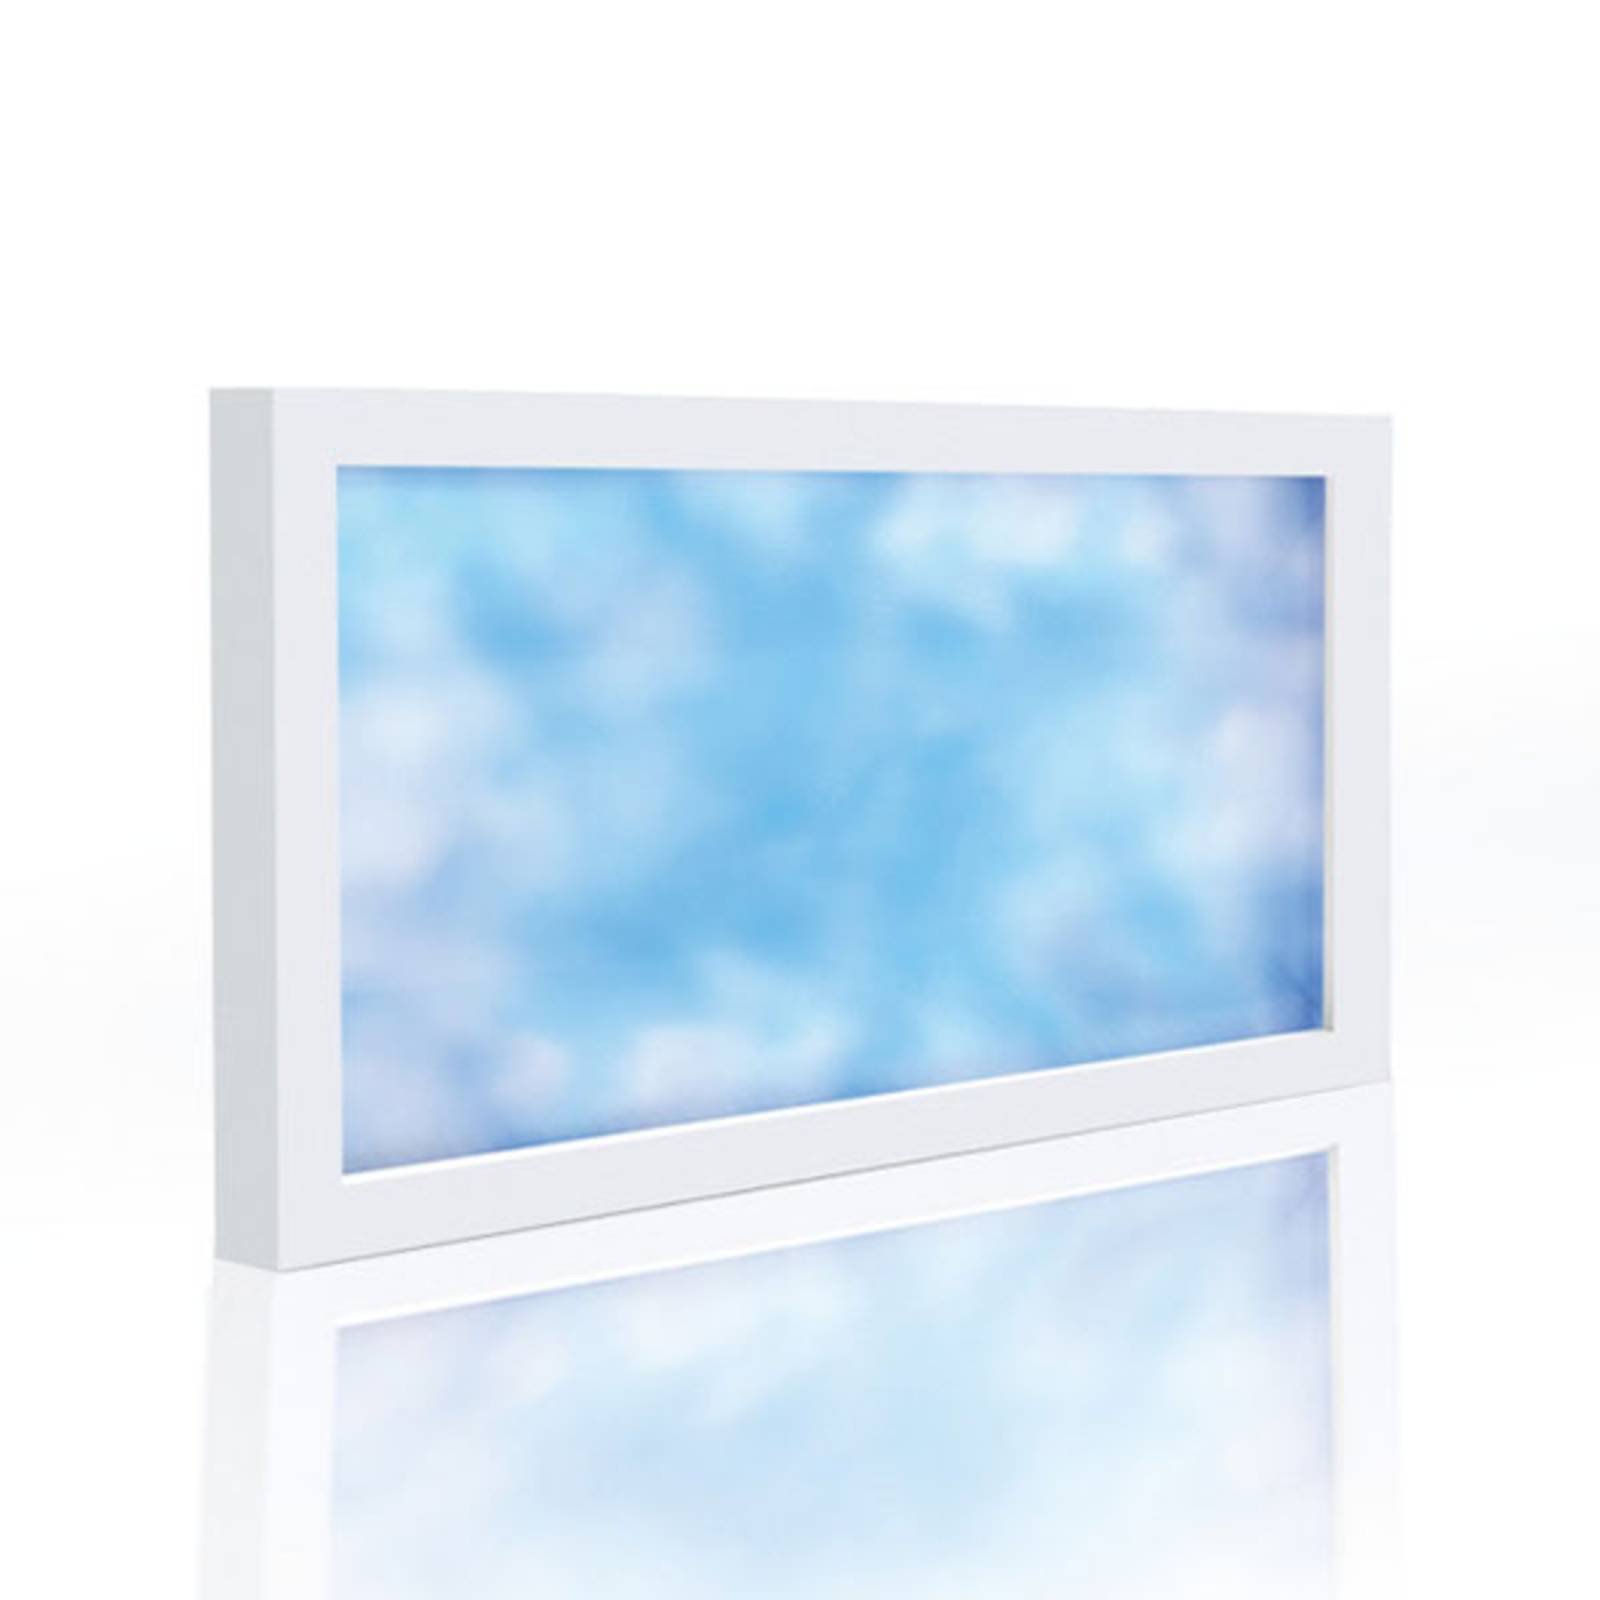 Hera sky window led panel 120 x 60cm